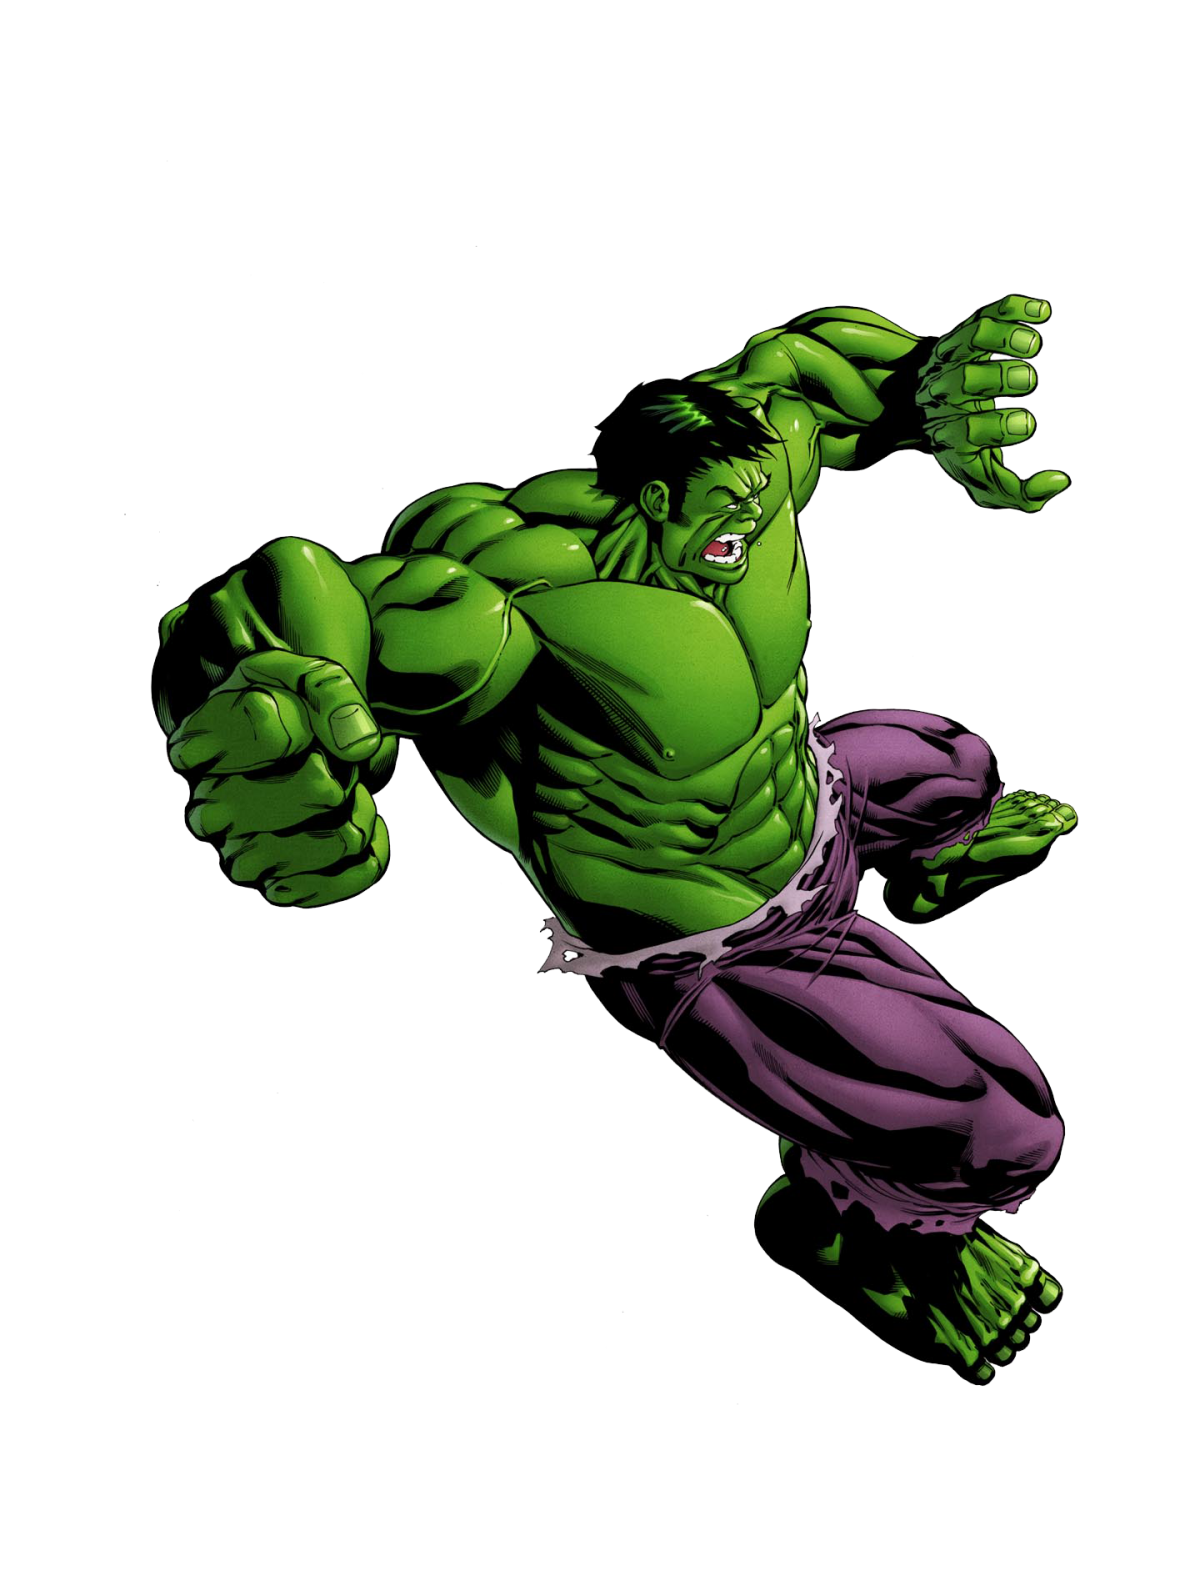 Hulk PNG Image in Transparent